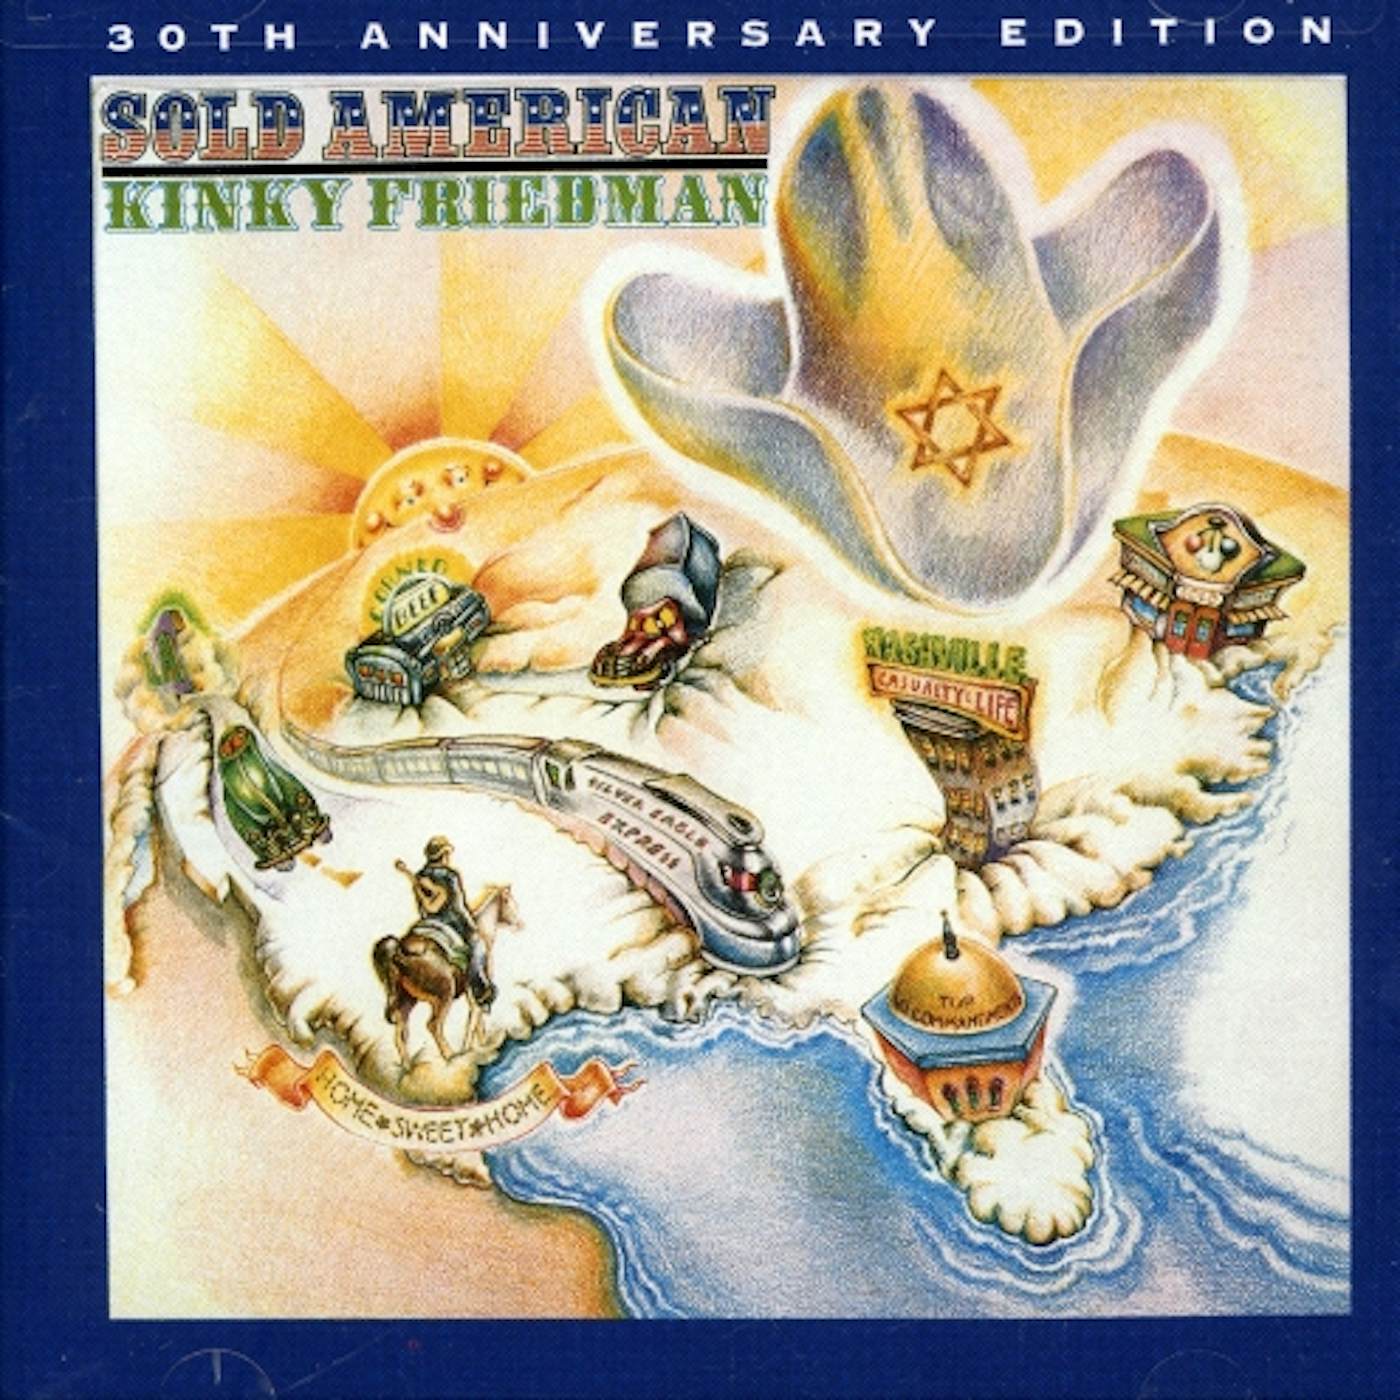 Kinky Friedman SOLD AMERICAN: 30TH ANNIVERSARY EDITION CD